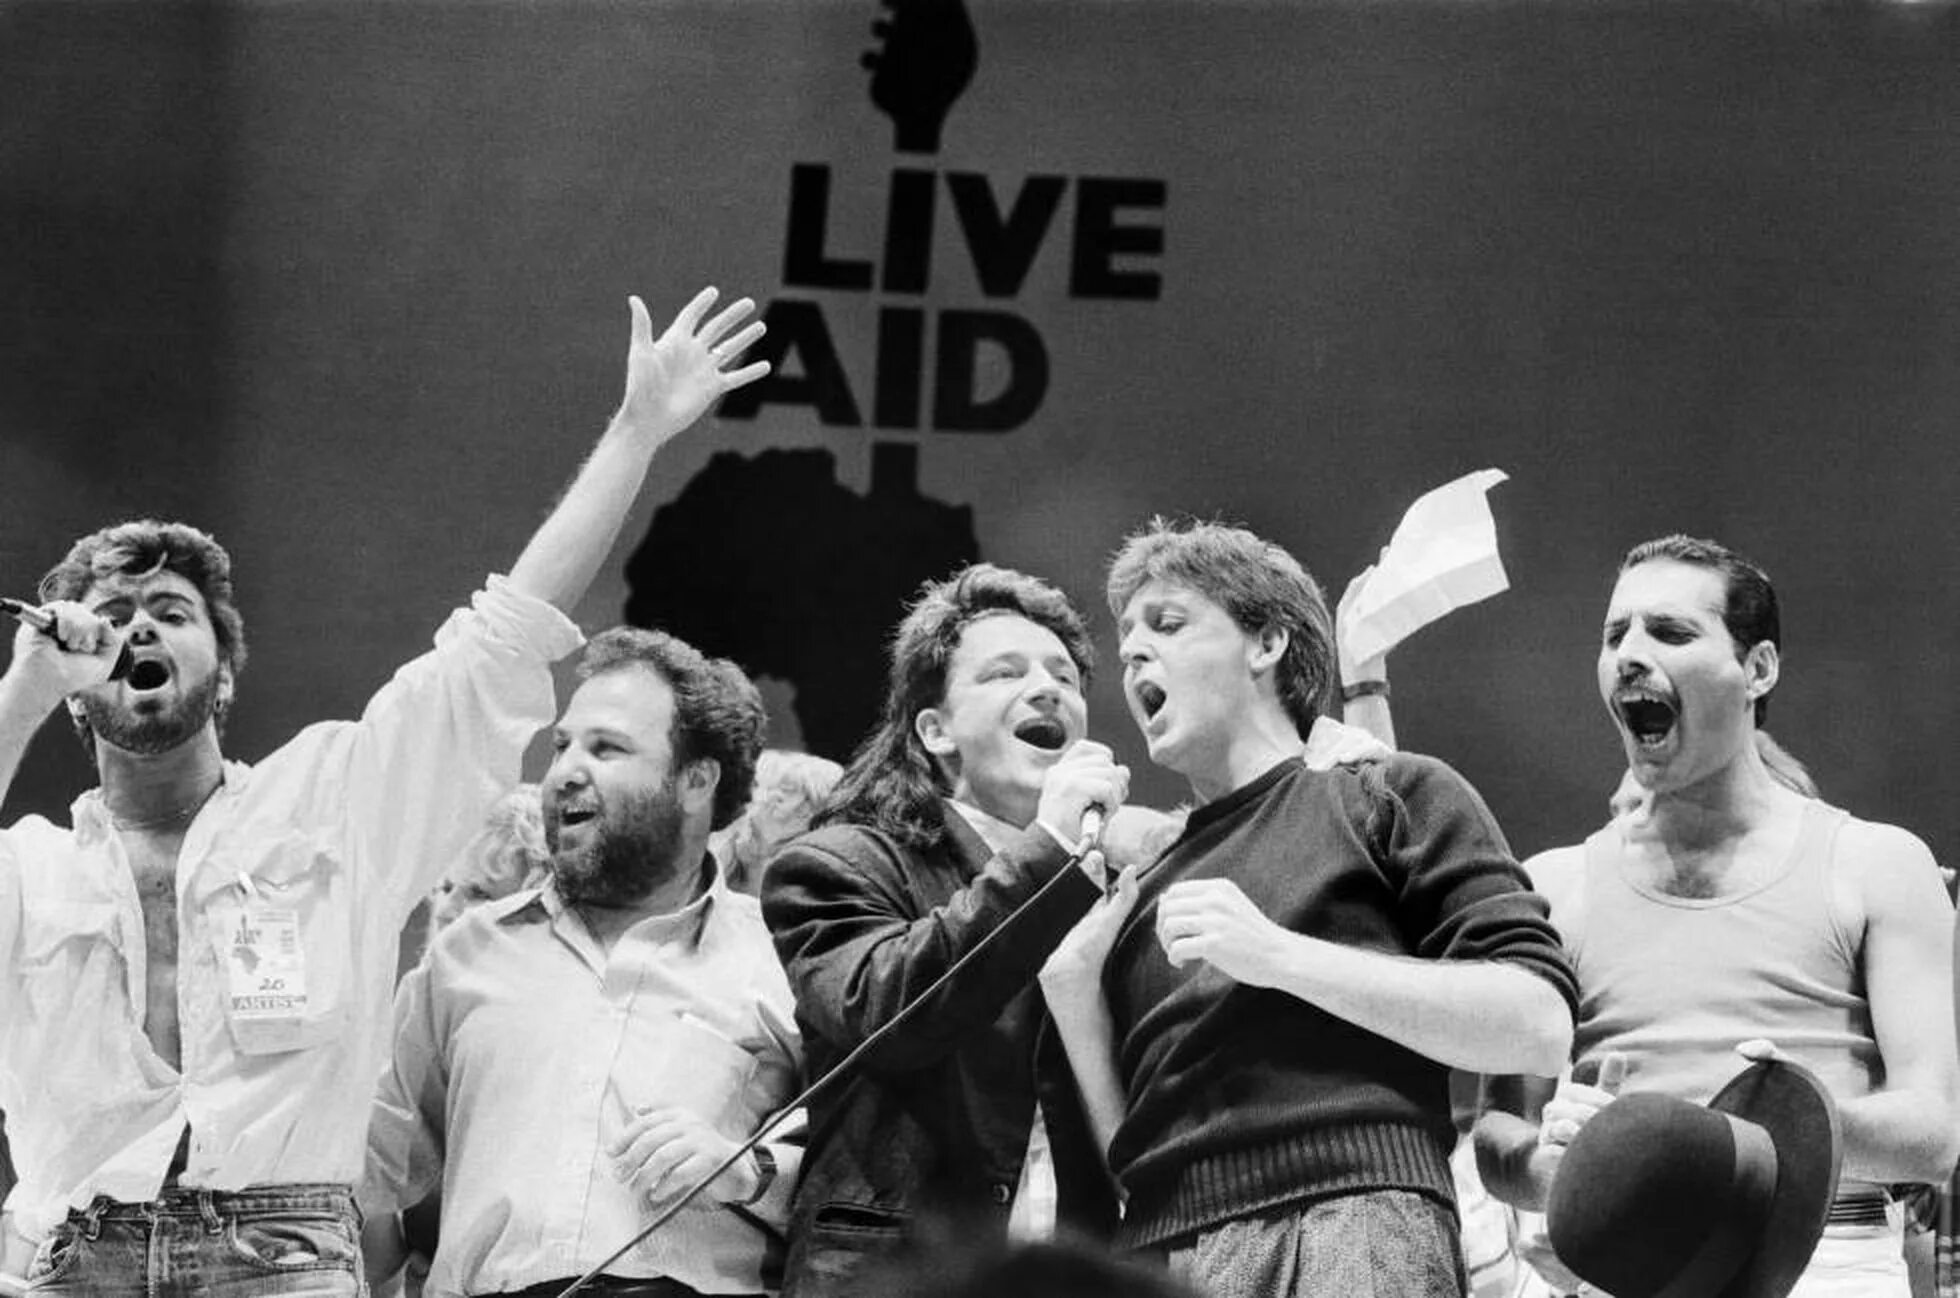 Концерт на английском языке. Квин Live Aid 1985. Концерт Live Aid 1985 Queen. Live Aid 1985 пол Маккартни. Фредди Меркьюри Live Aid 1985.